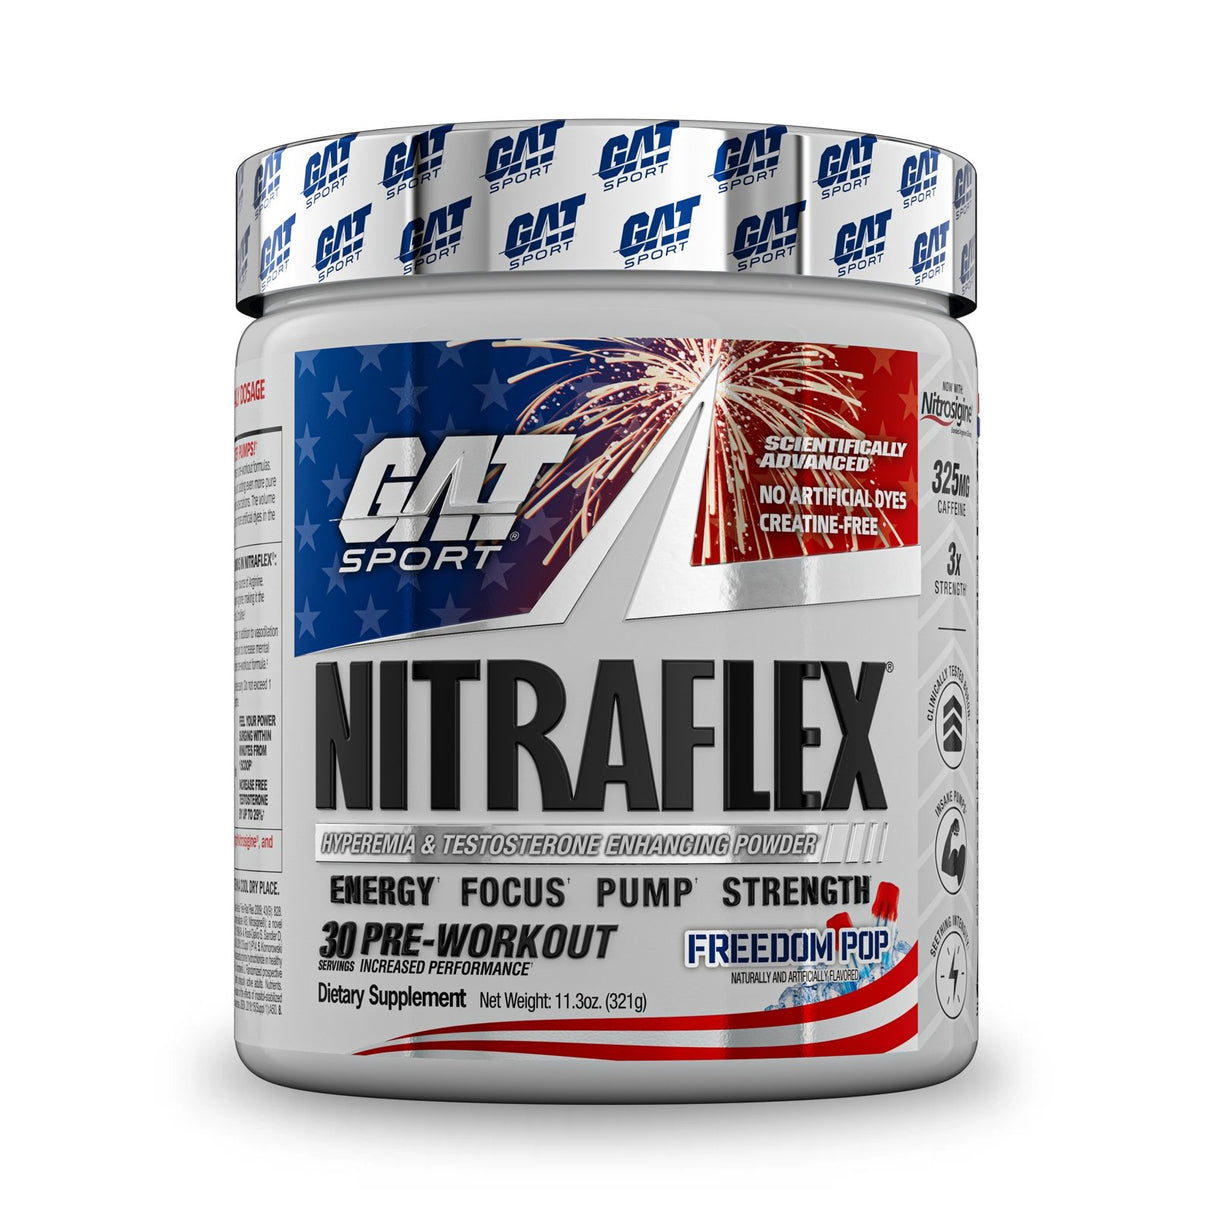 GAT SPORT NITRAFLEX ADVANCED Pre-Workout - patriot blast image